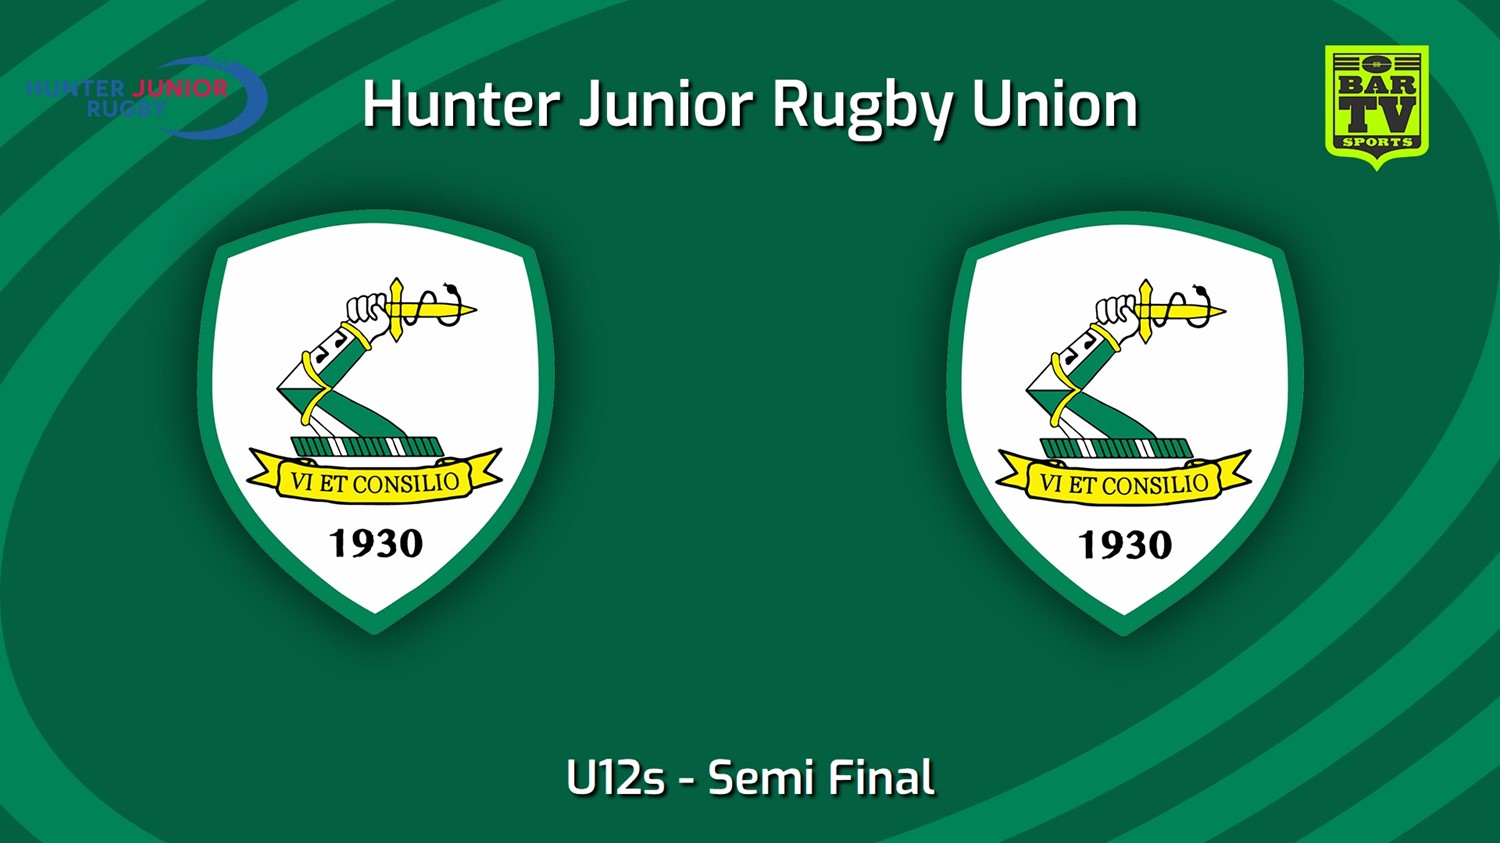 230826-Hunter Junior Rugby Union Semi Final - U12s - Merewether Carlton v Merewether Carlton Slate Image